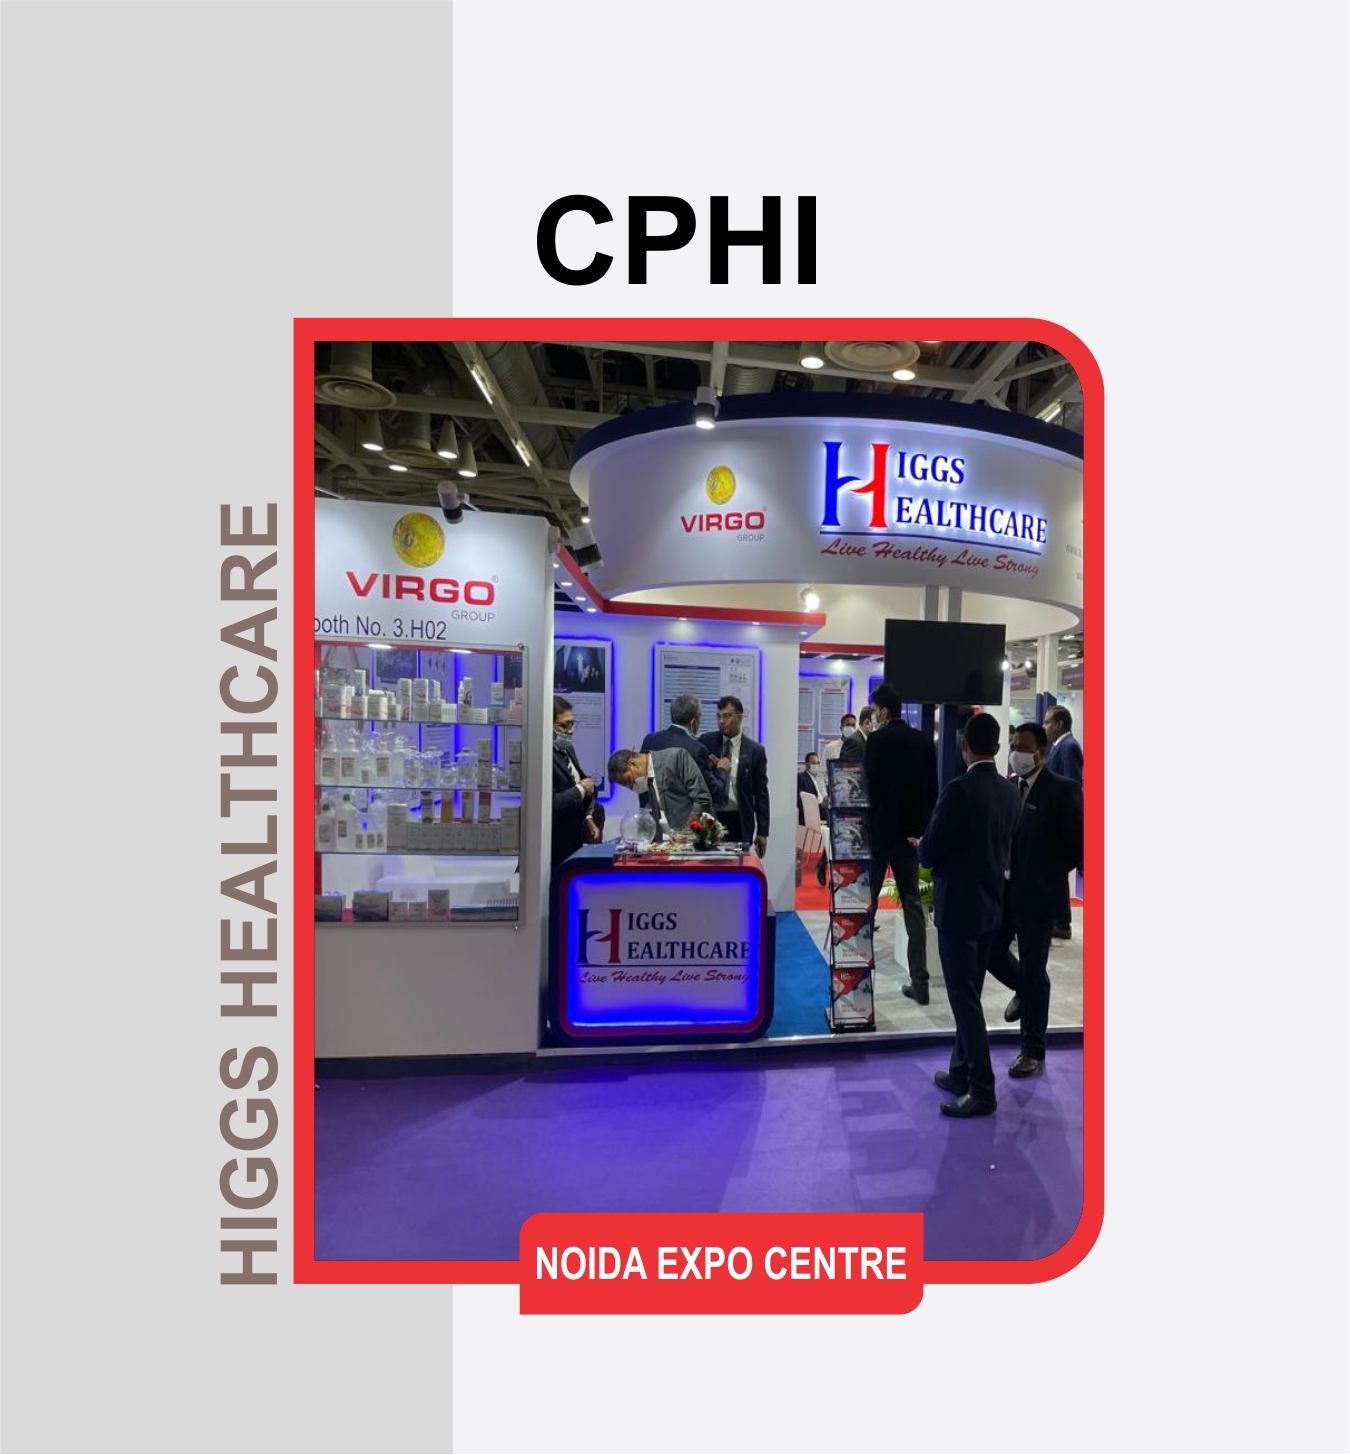 HIGGS HEALTHCARE, CPHI (India Expo Centre)